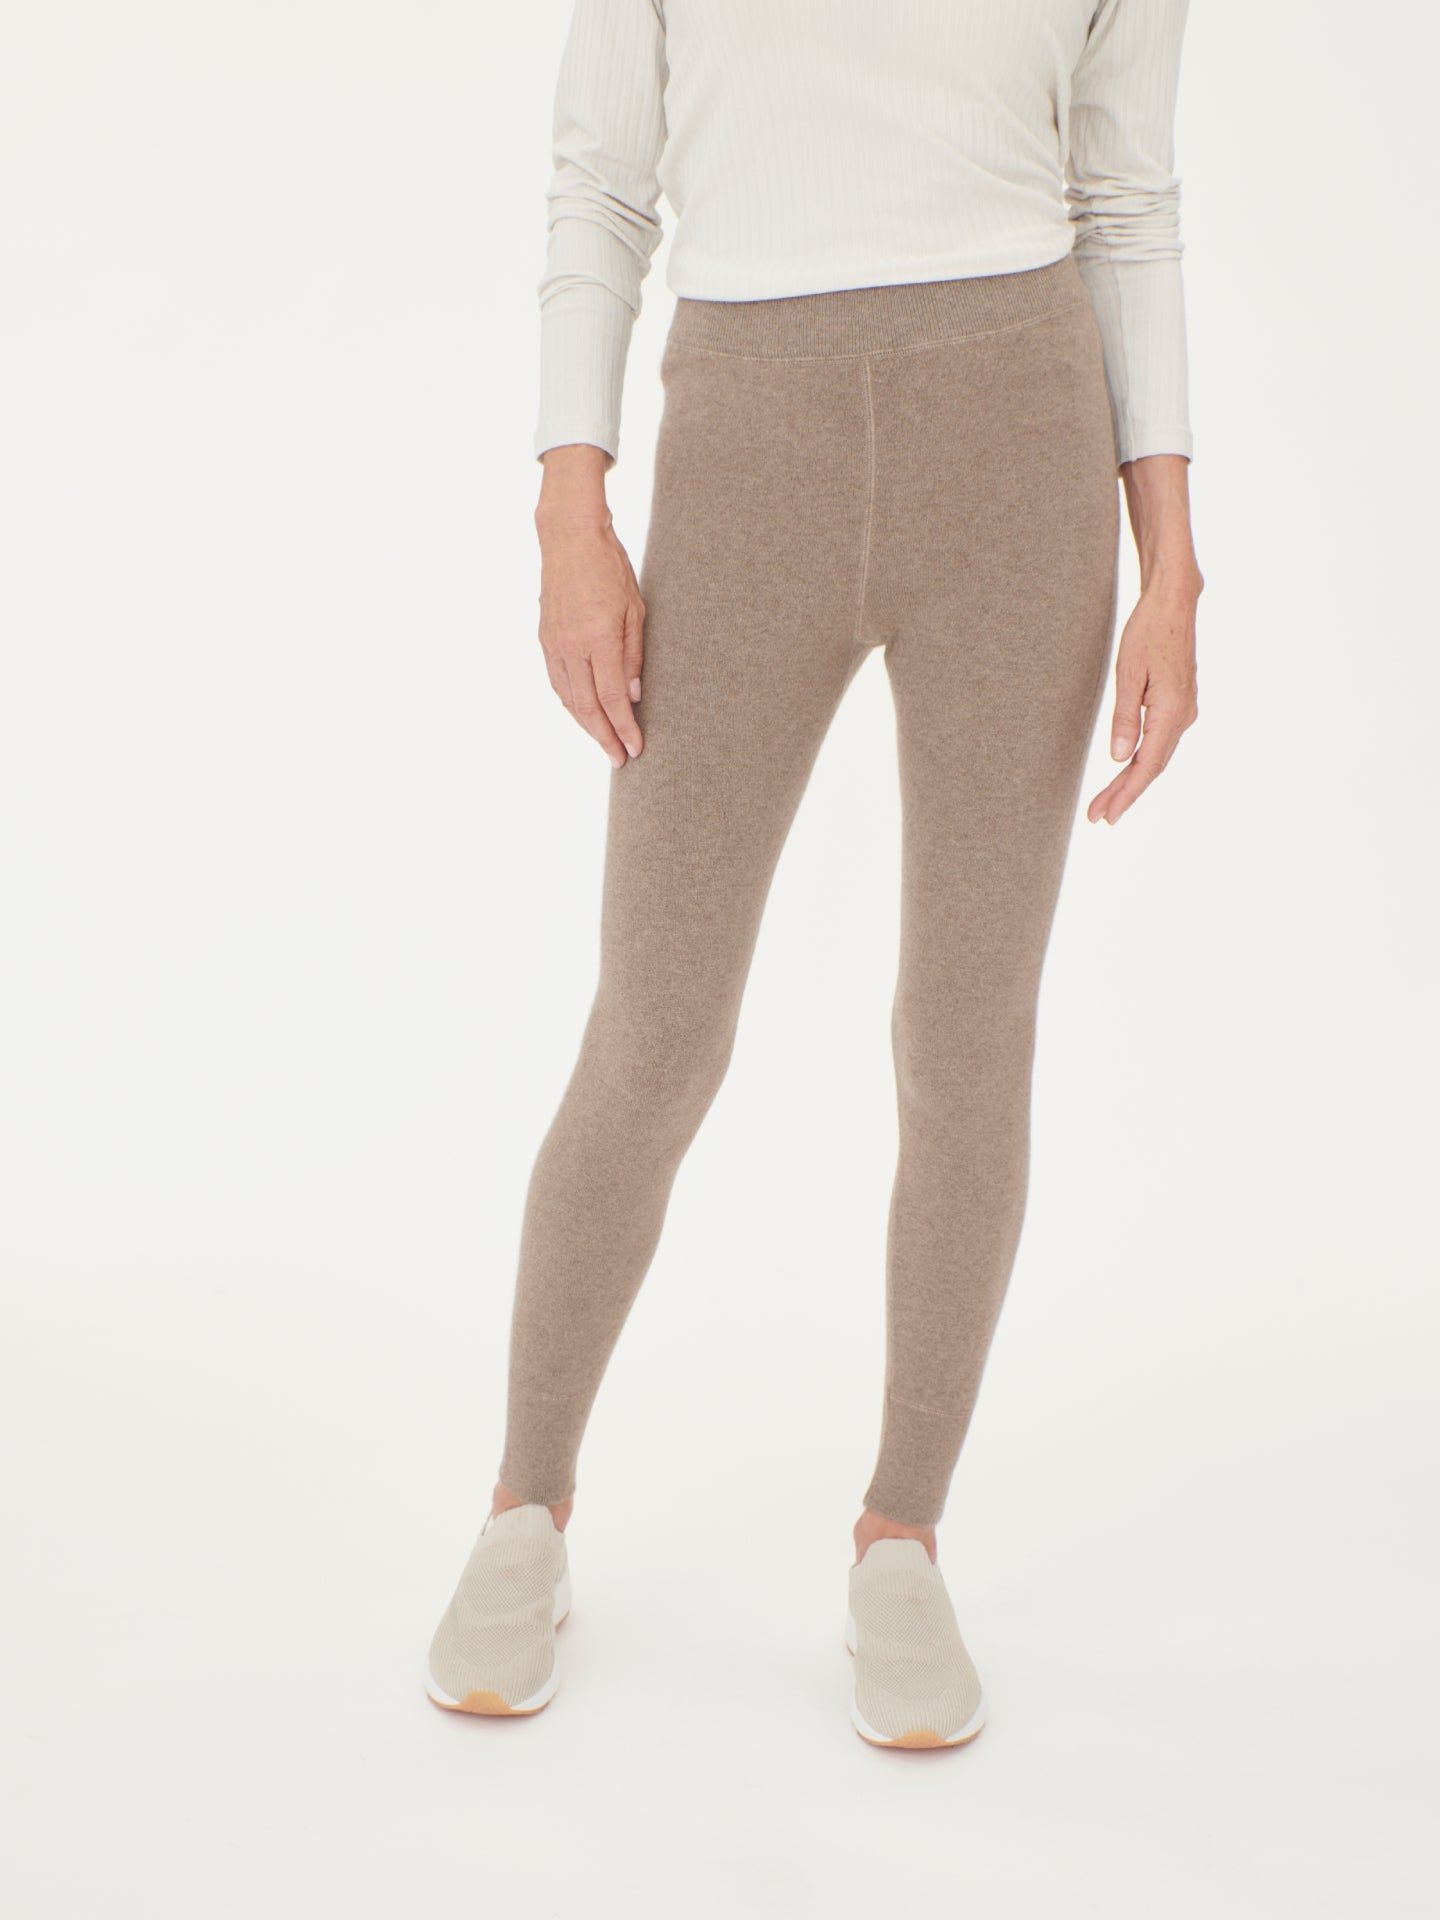 Women's Cashmere Tight-Fit Leggings Taupe - Gobi Cashmere